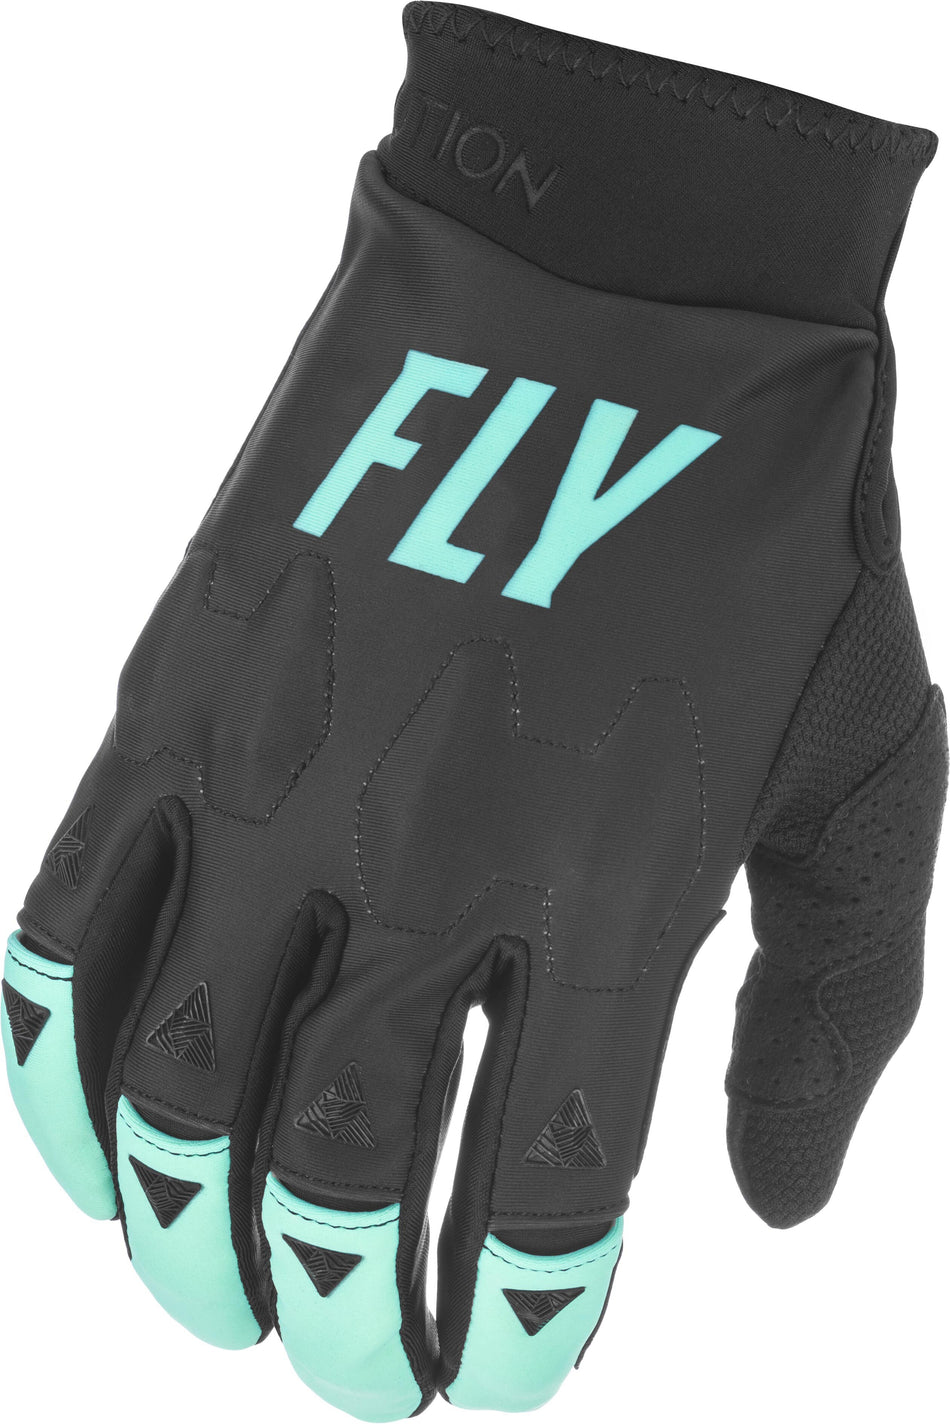 FLY RACING Evolution Dst L.E. Gloves Mint/Black Sz 10 374-11910